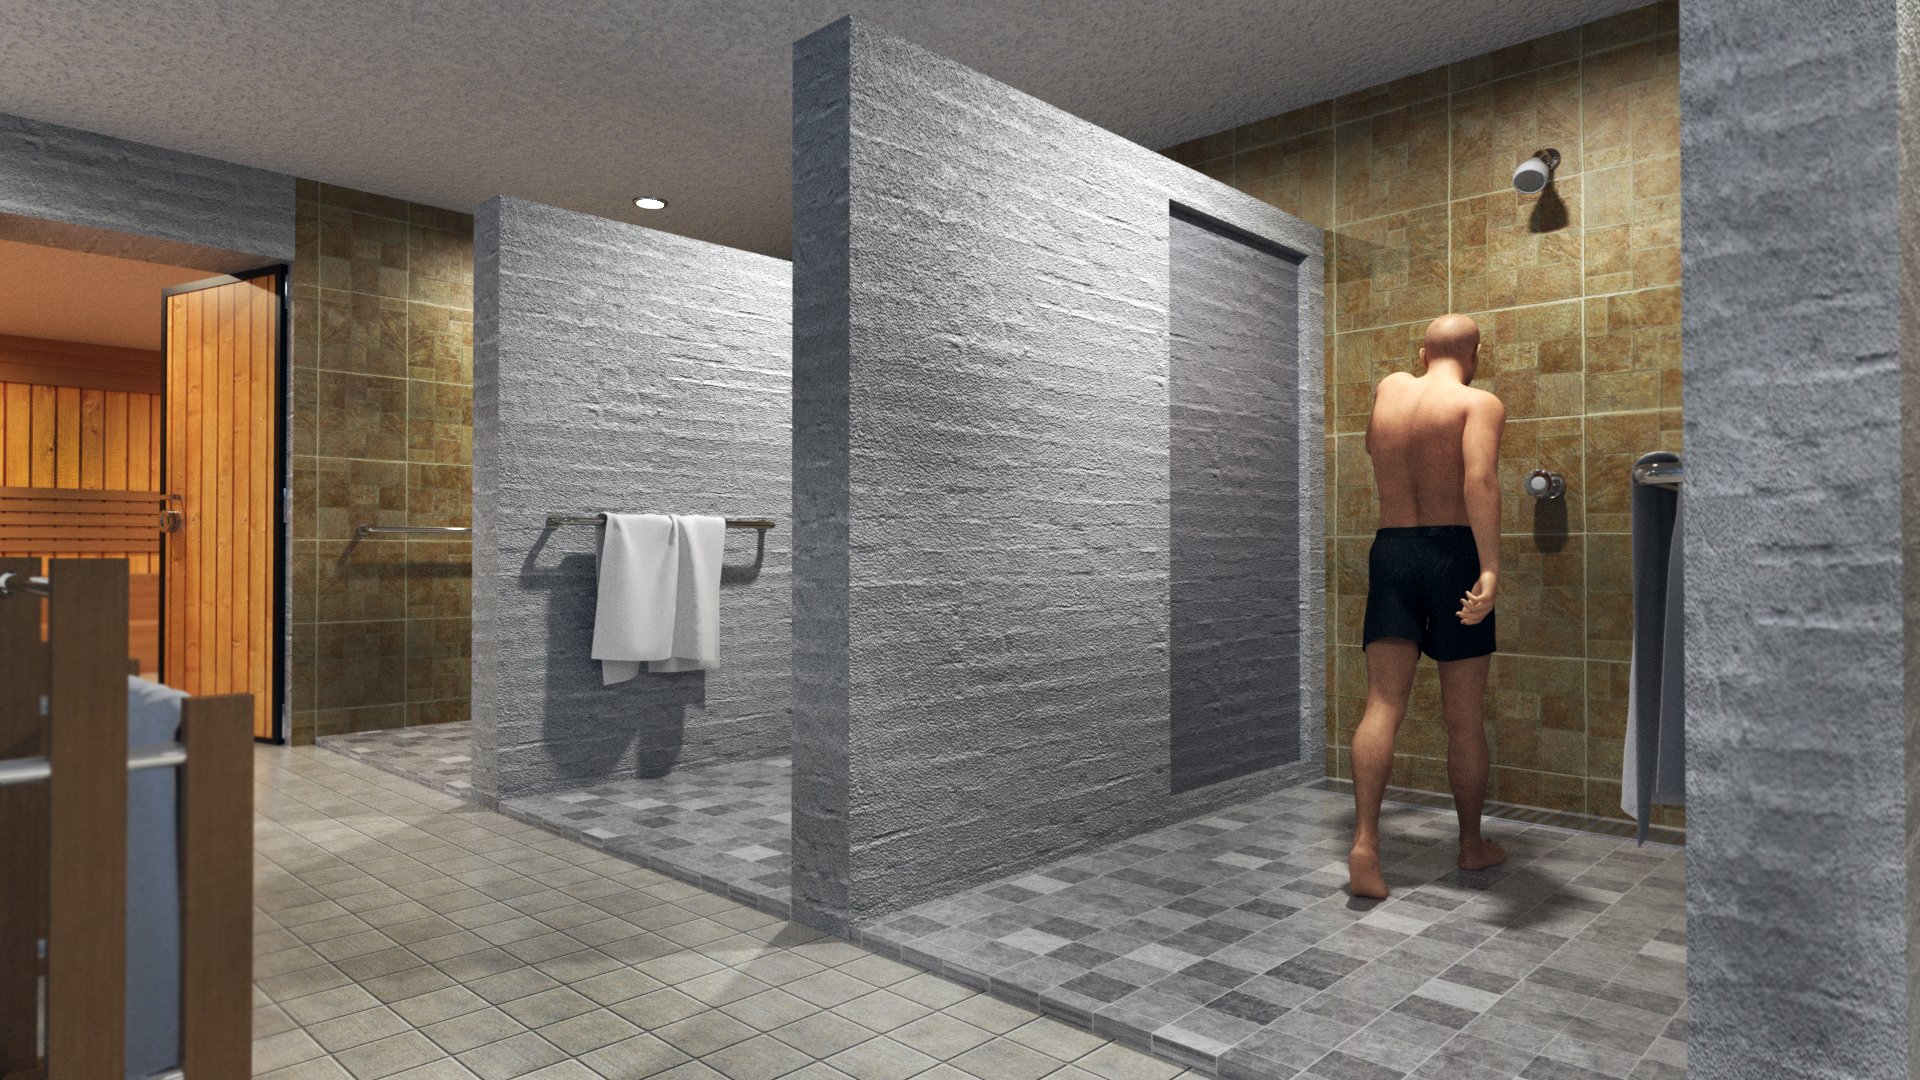 Condominium Locker Room by: Tesla3dCorp, 3D Models by Daz 3D